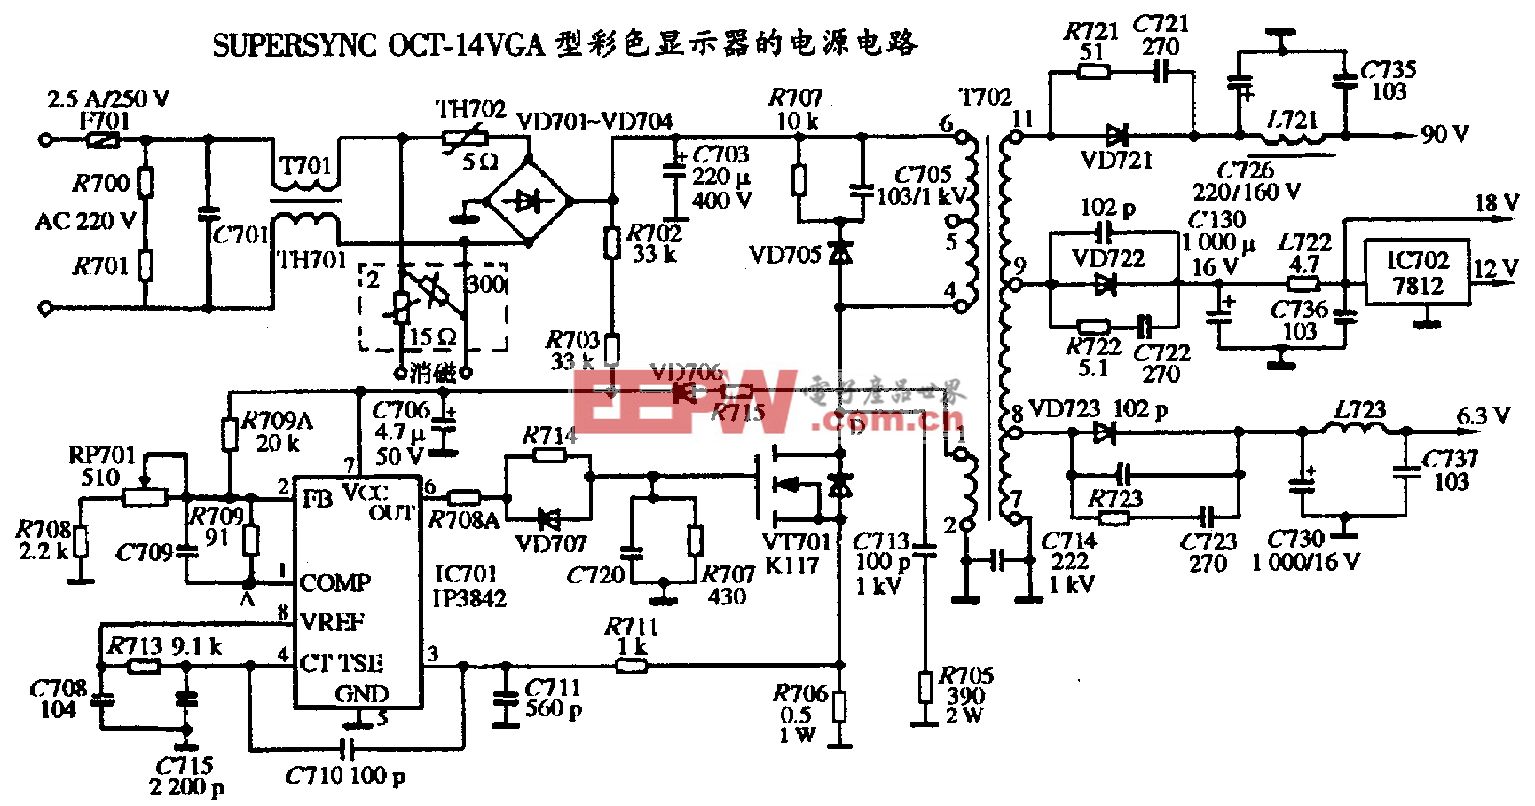 093、SUPERSYNC OCT-14VGA型彩色显示器的电源电路图